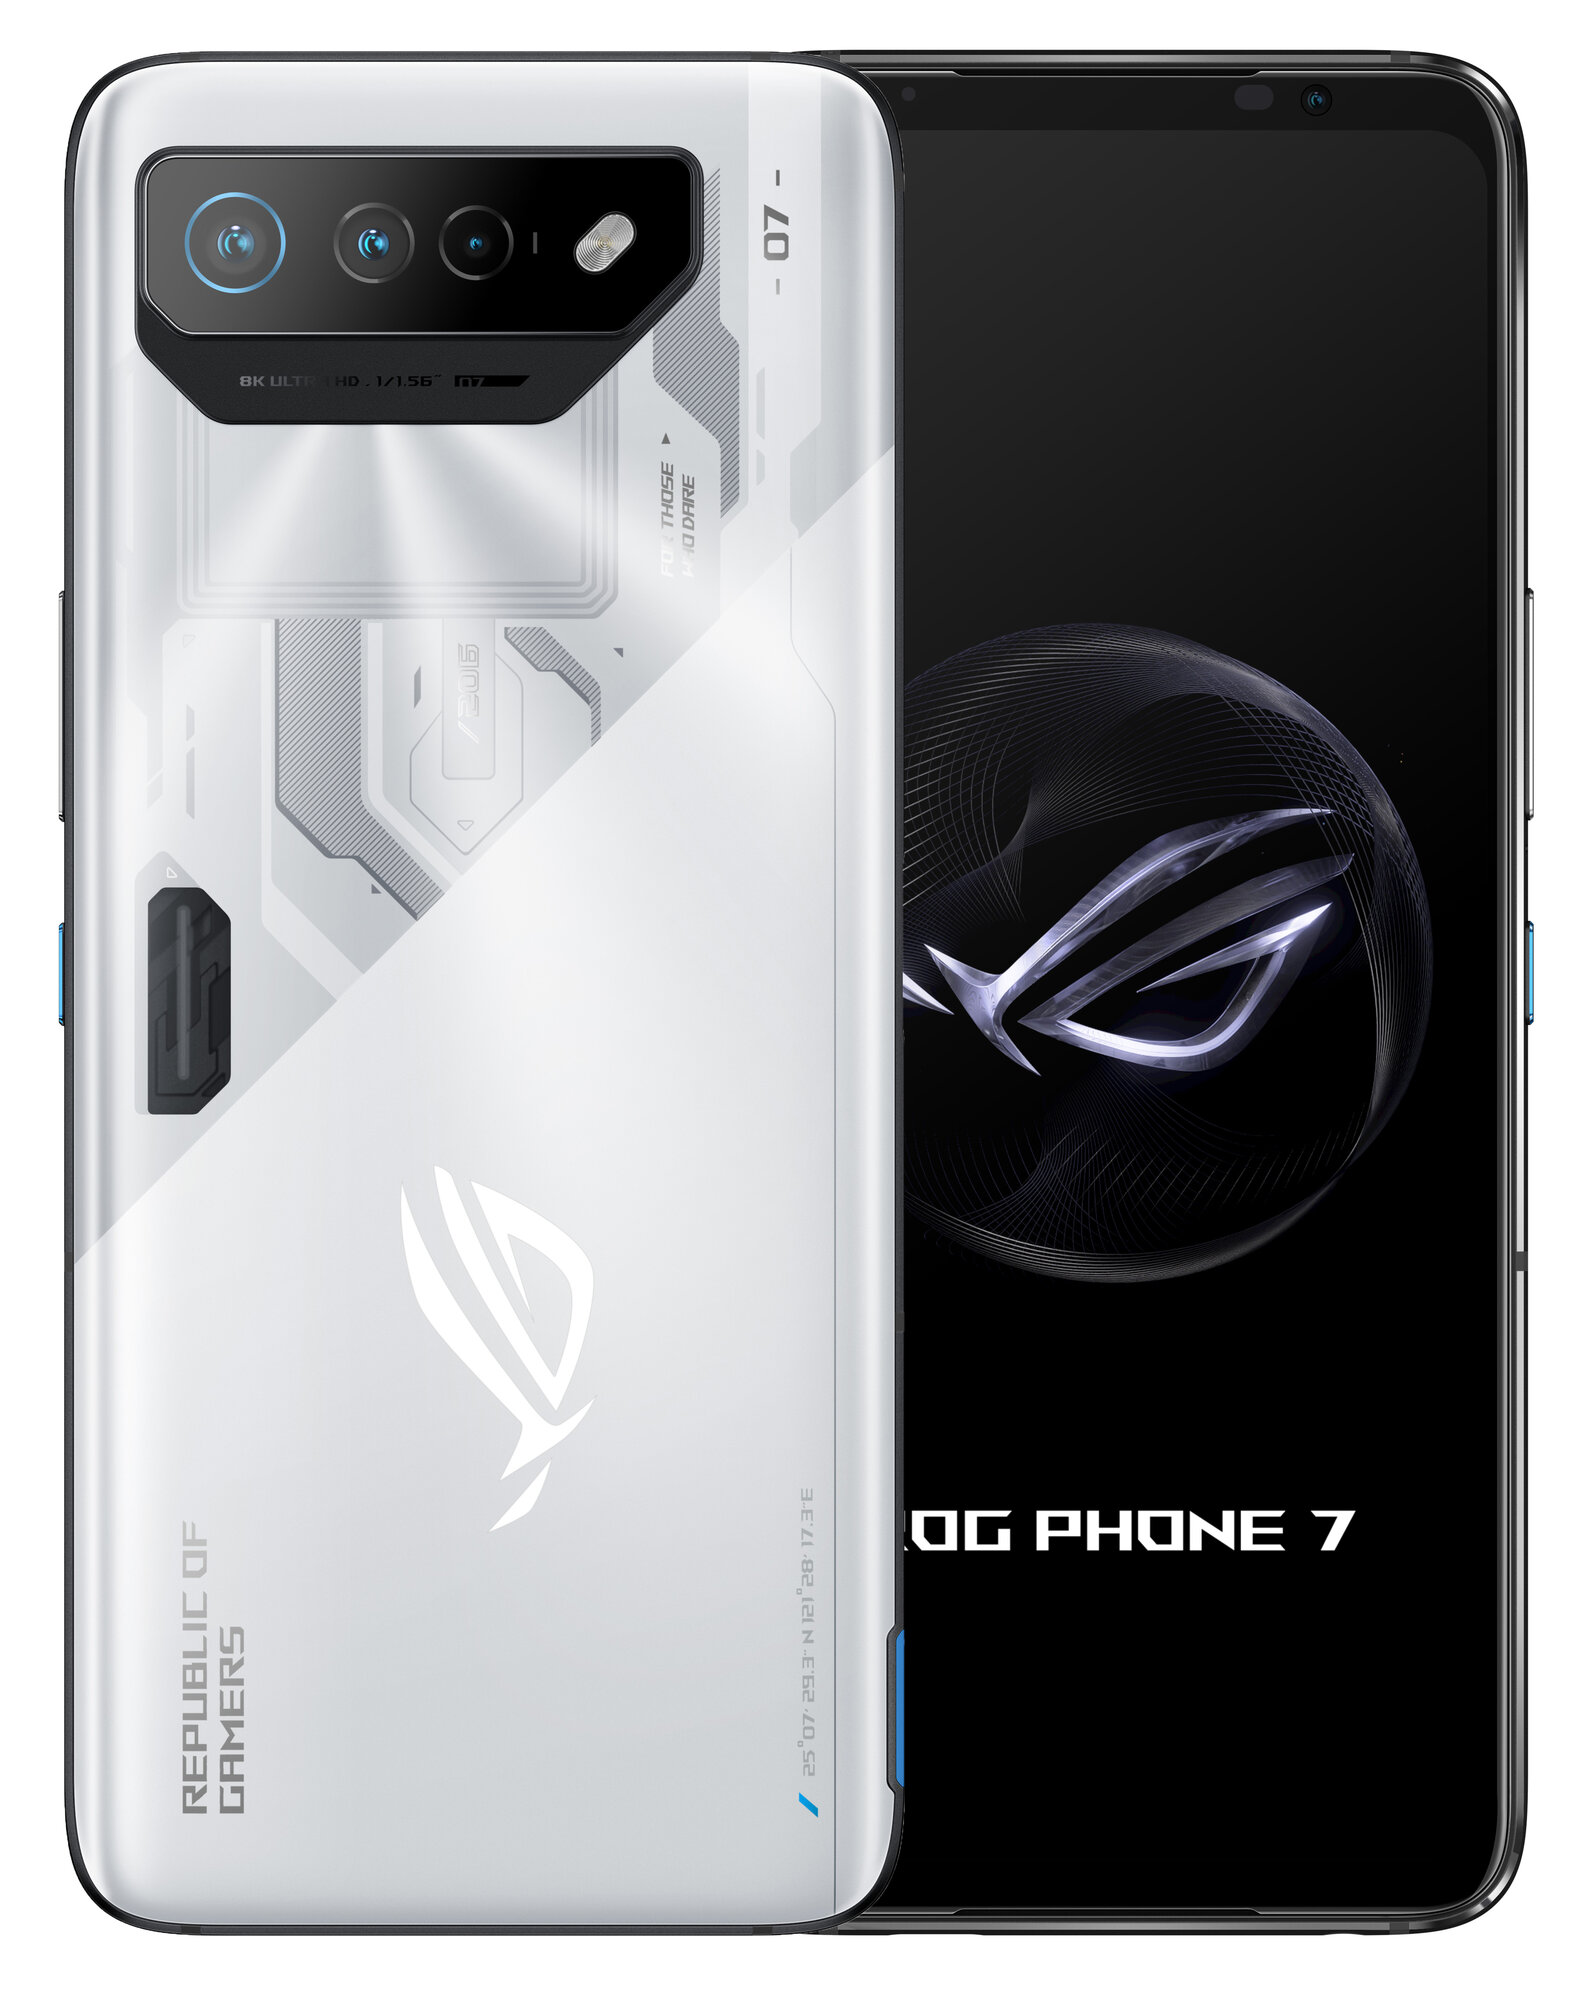 Смартфон Asus AI2205 ROG Phone 7 5G 256Gb 8Gb белый моноблок 3G 4G 2Sim 6.78 1080x2448 Android 13 50Mpix 802.11 a/b/g/n/ac/ax/be NFC GPS GSM900/1800 G